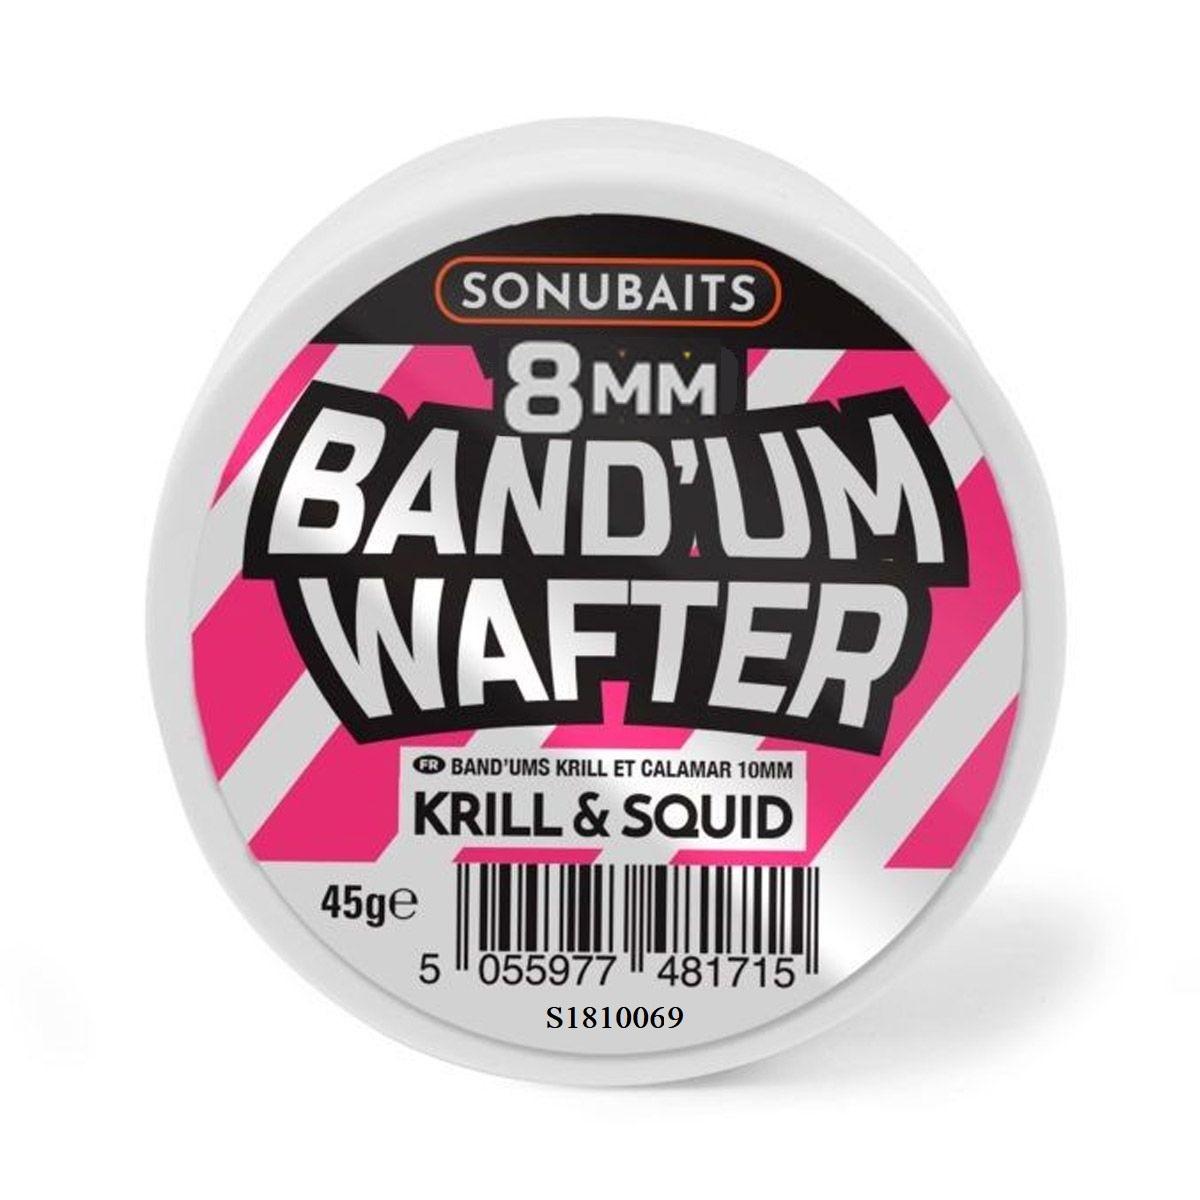 Sonubaits Band UM Wafters | Banoffee 8mm